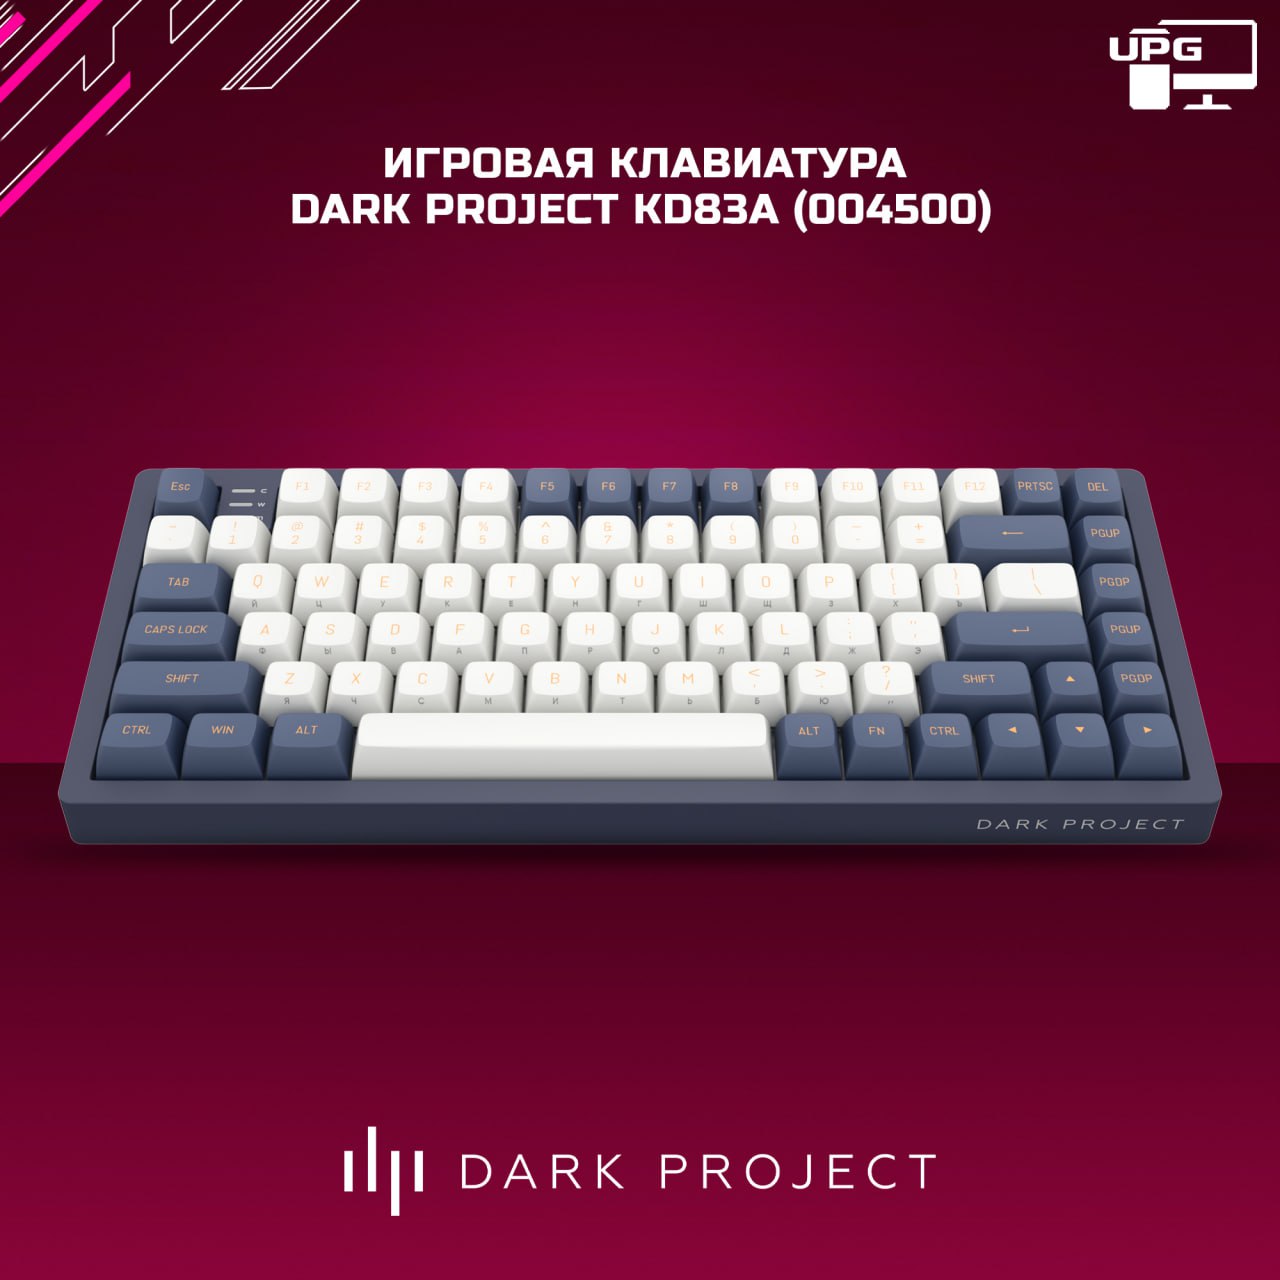 KD 83 A дарк Проджект. Dark Project kd83a. Sapphire переключатели клавиатура. Kd83a. Дарк проджект kd83 g3ms magnetite